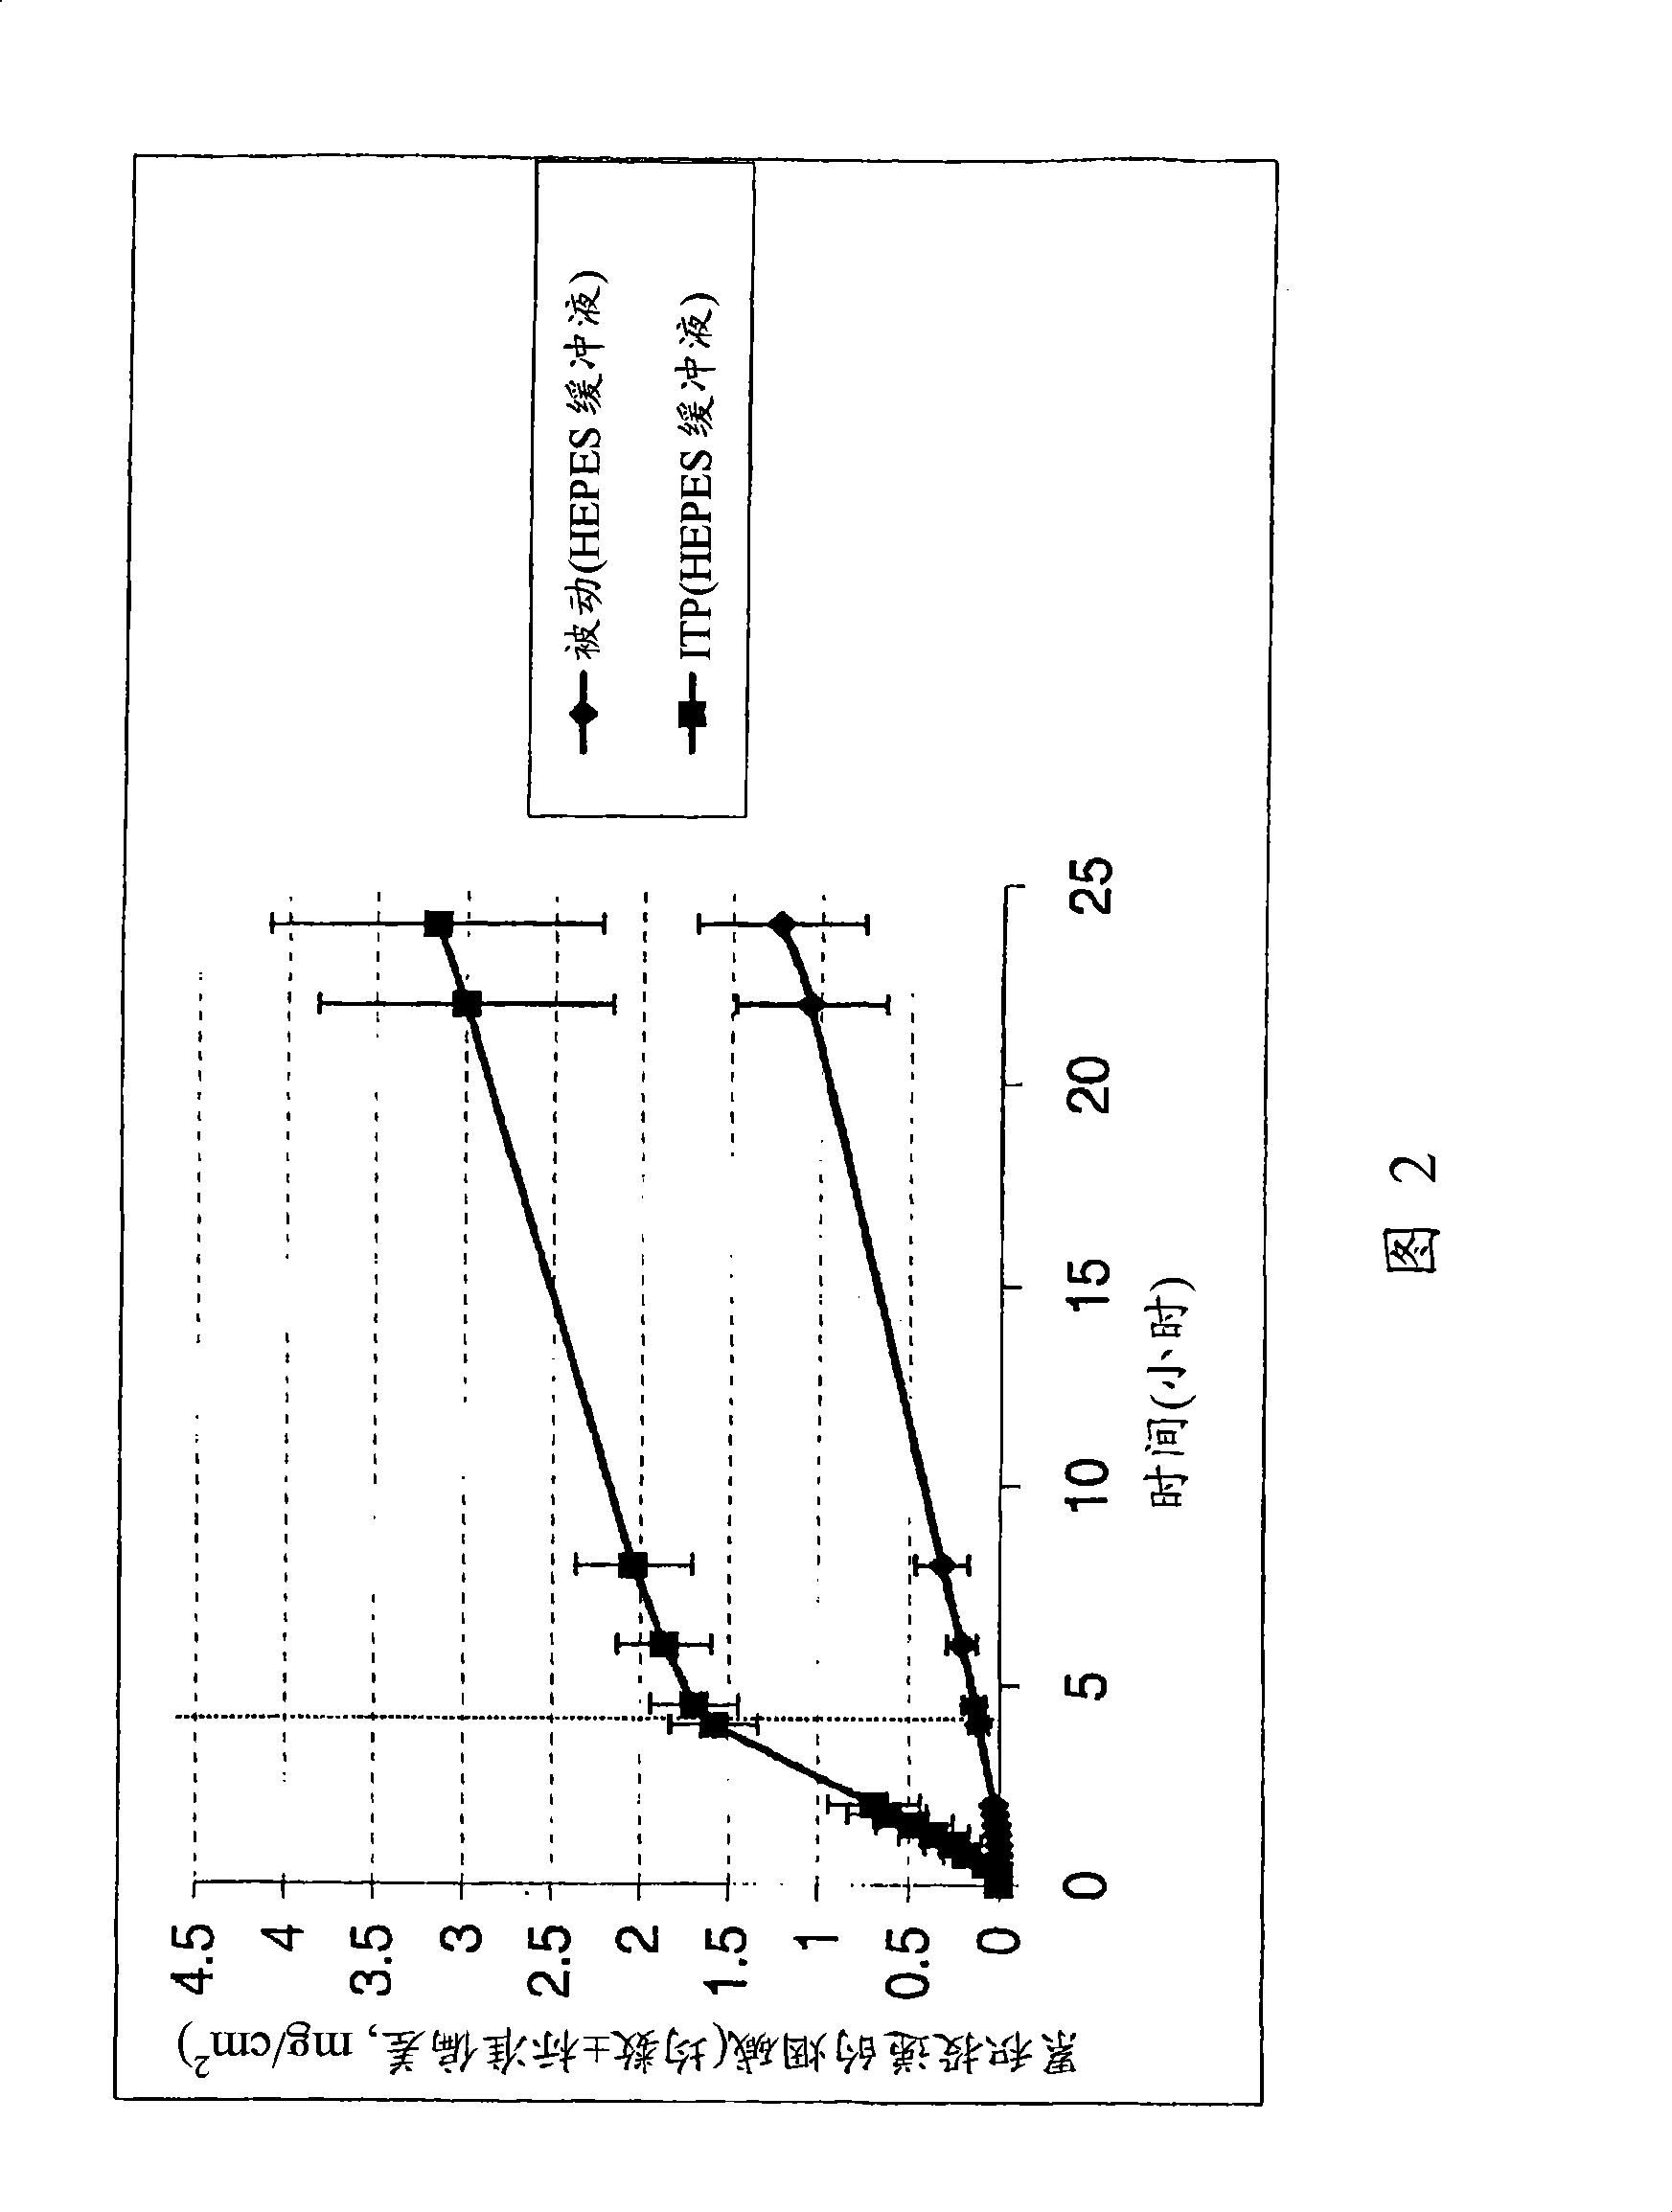 Iontophoretic transdermal delivery of nicotine salts